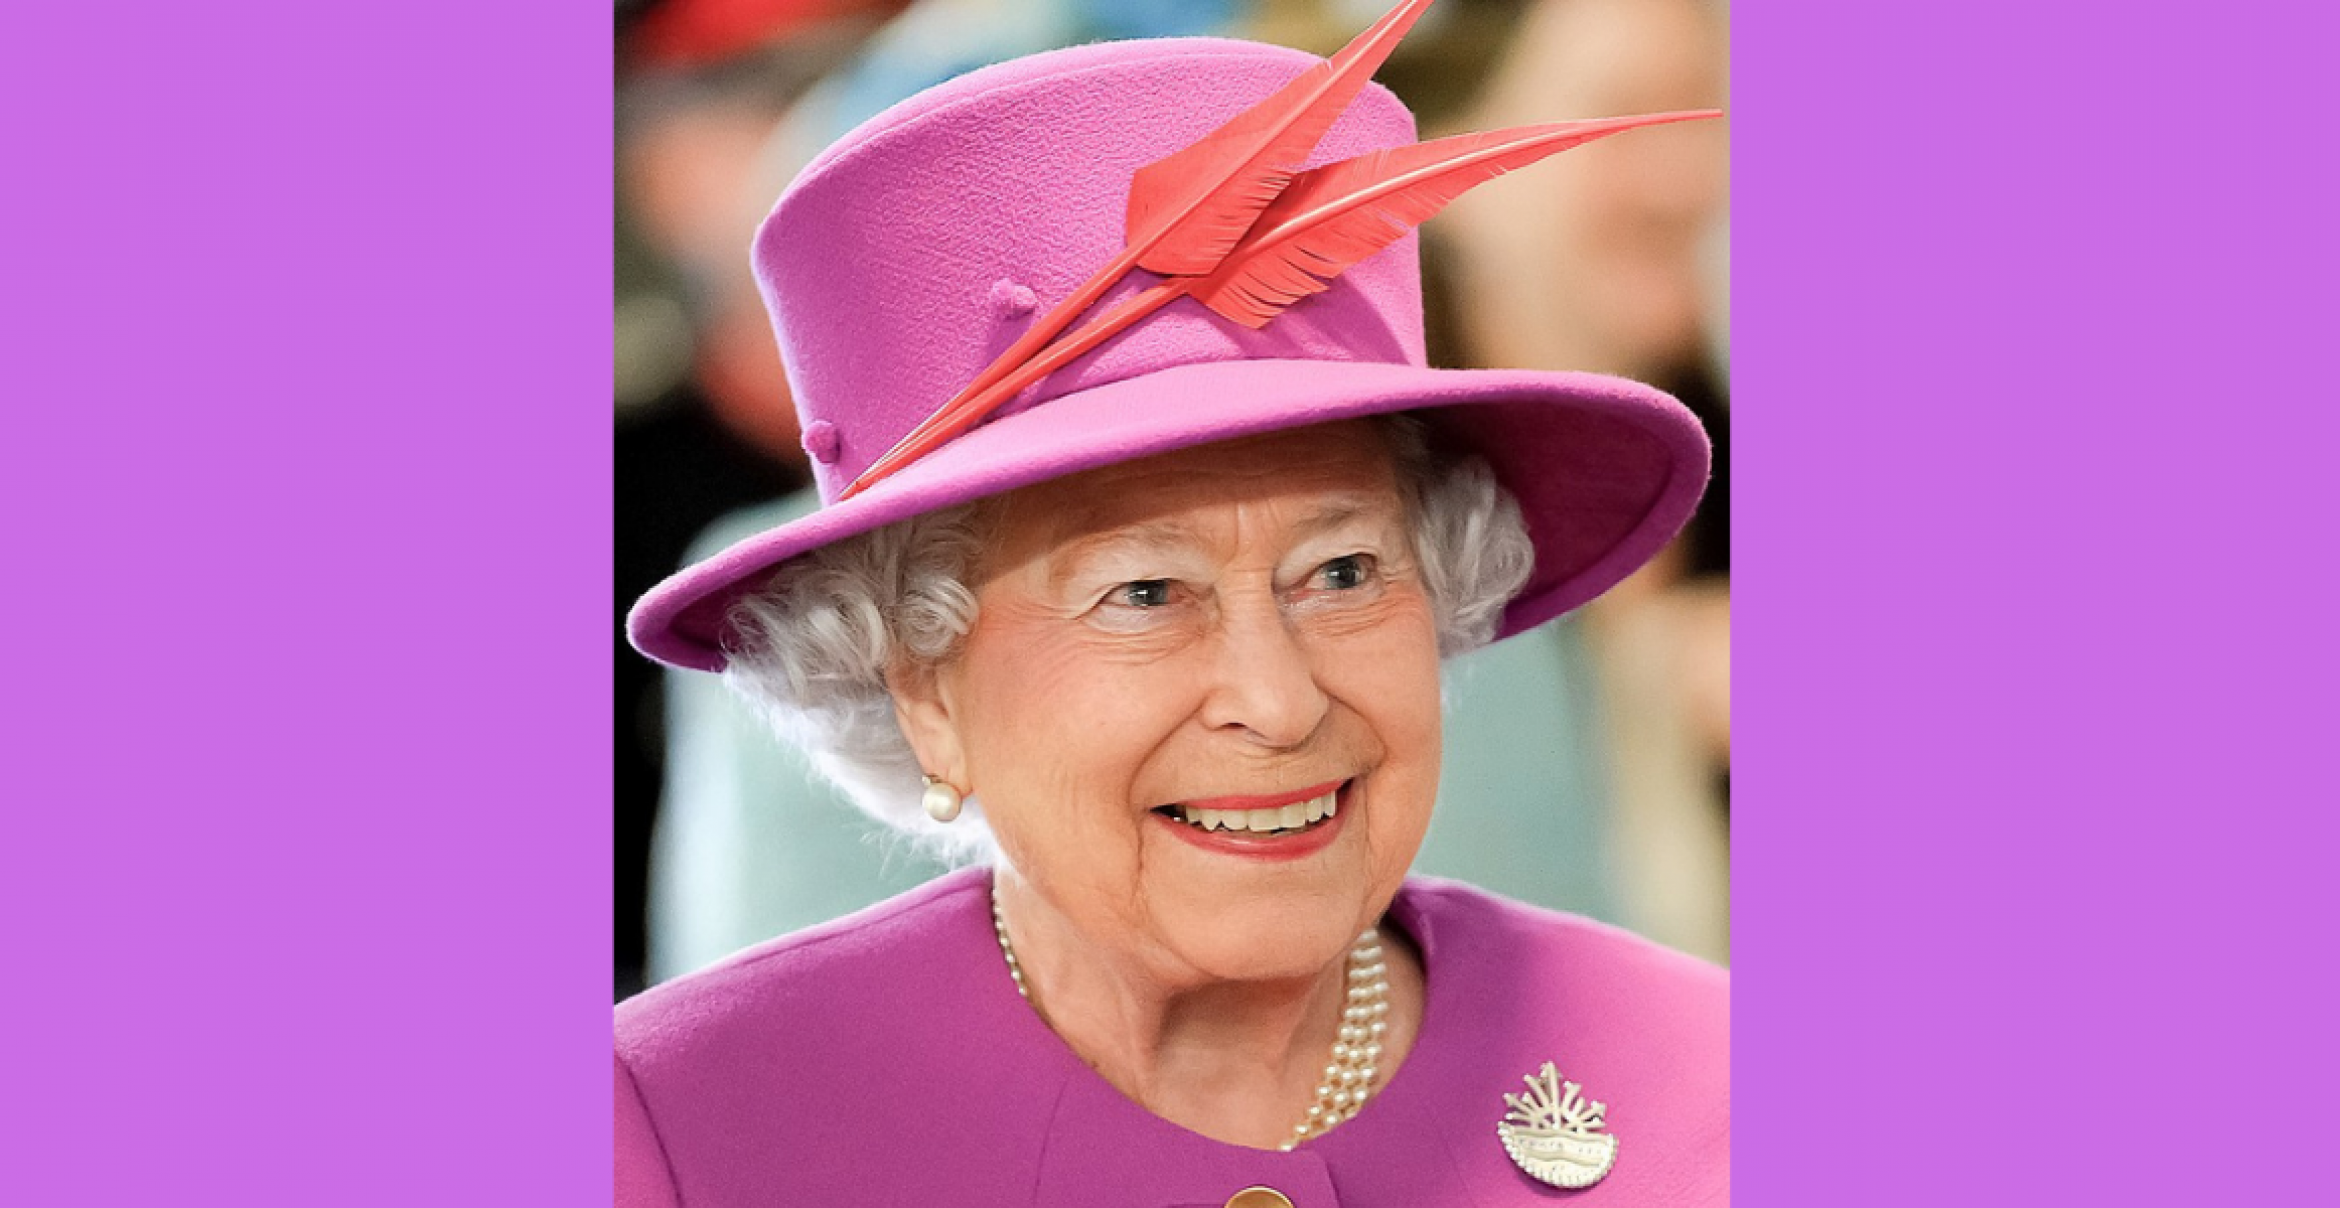 Königlicher Ketchup: Queen Elizabeth II launcht neues Produkt